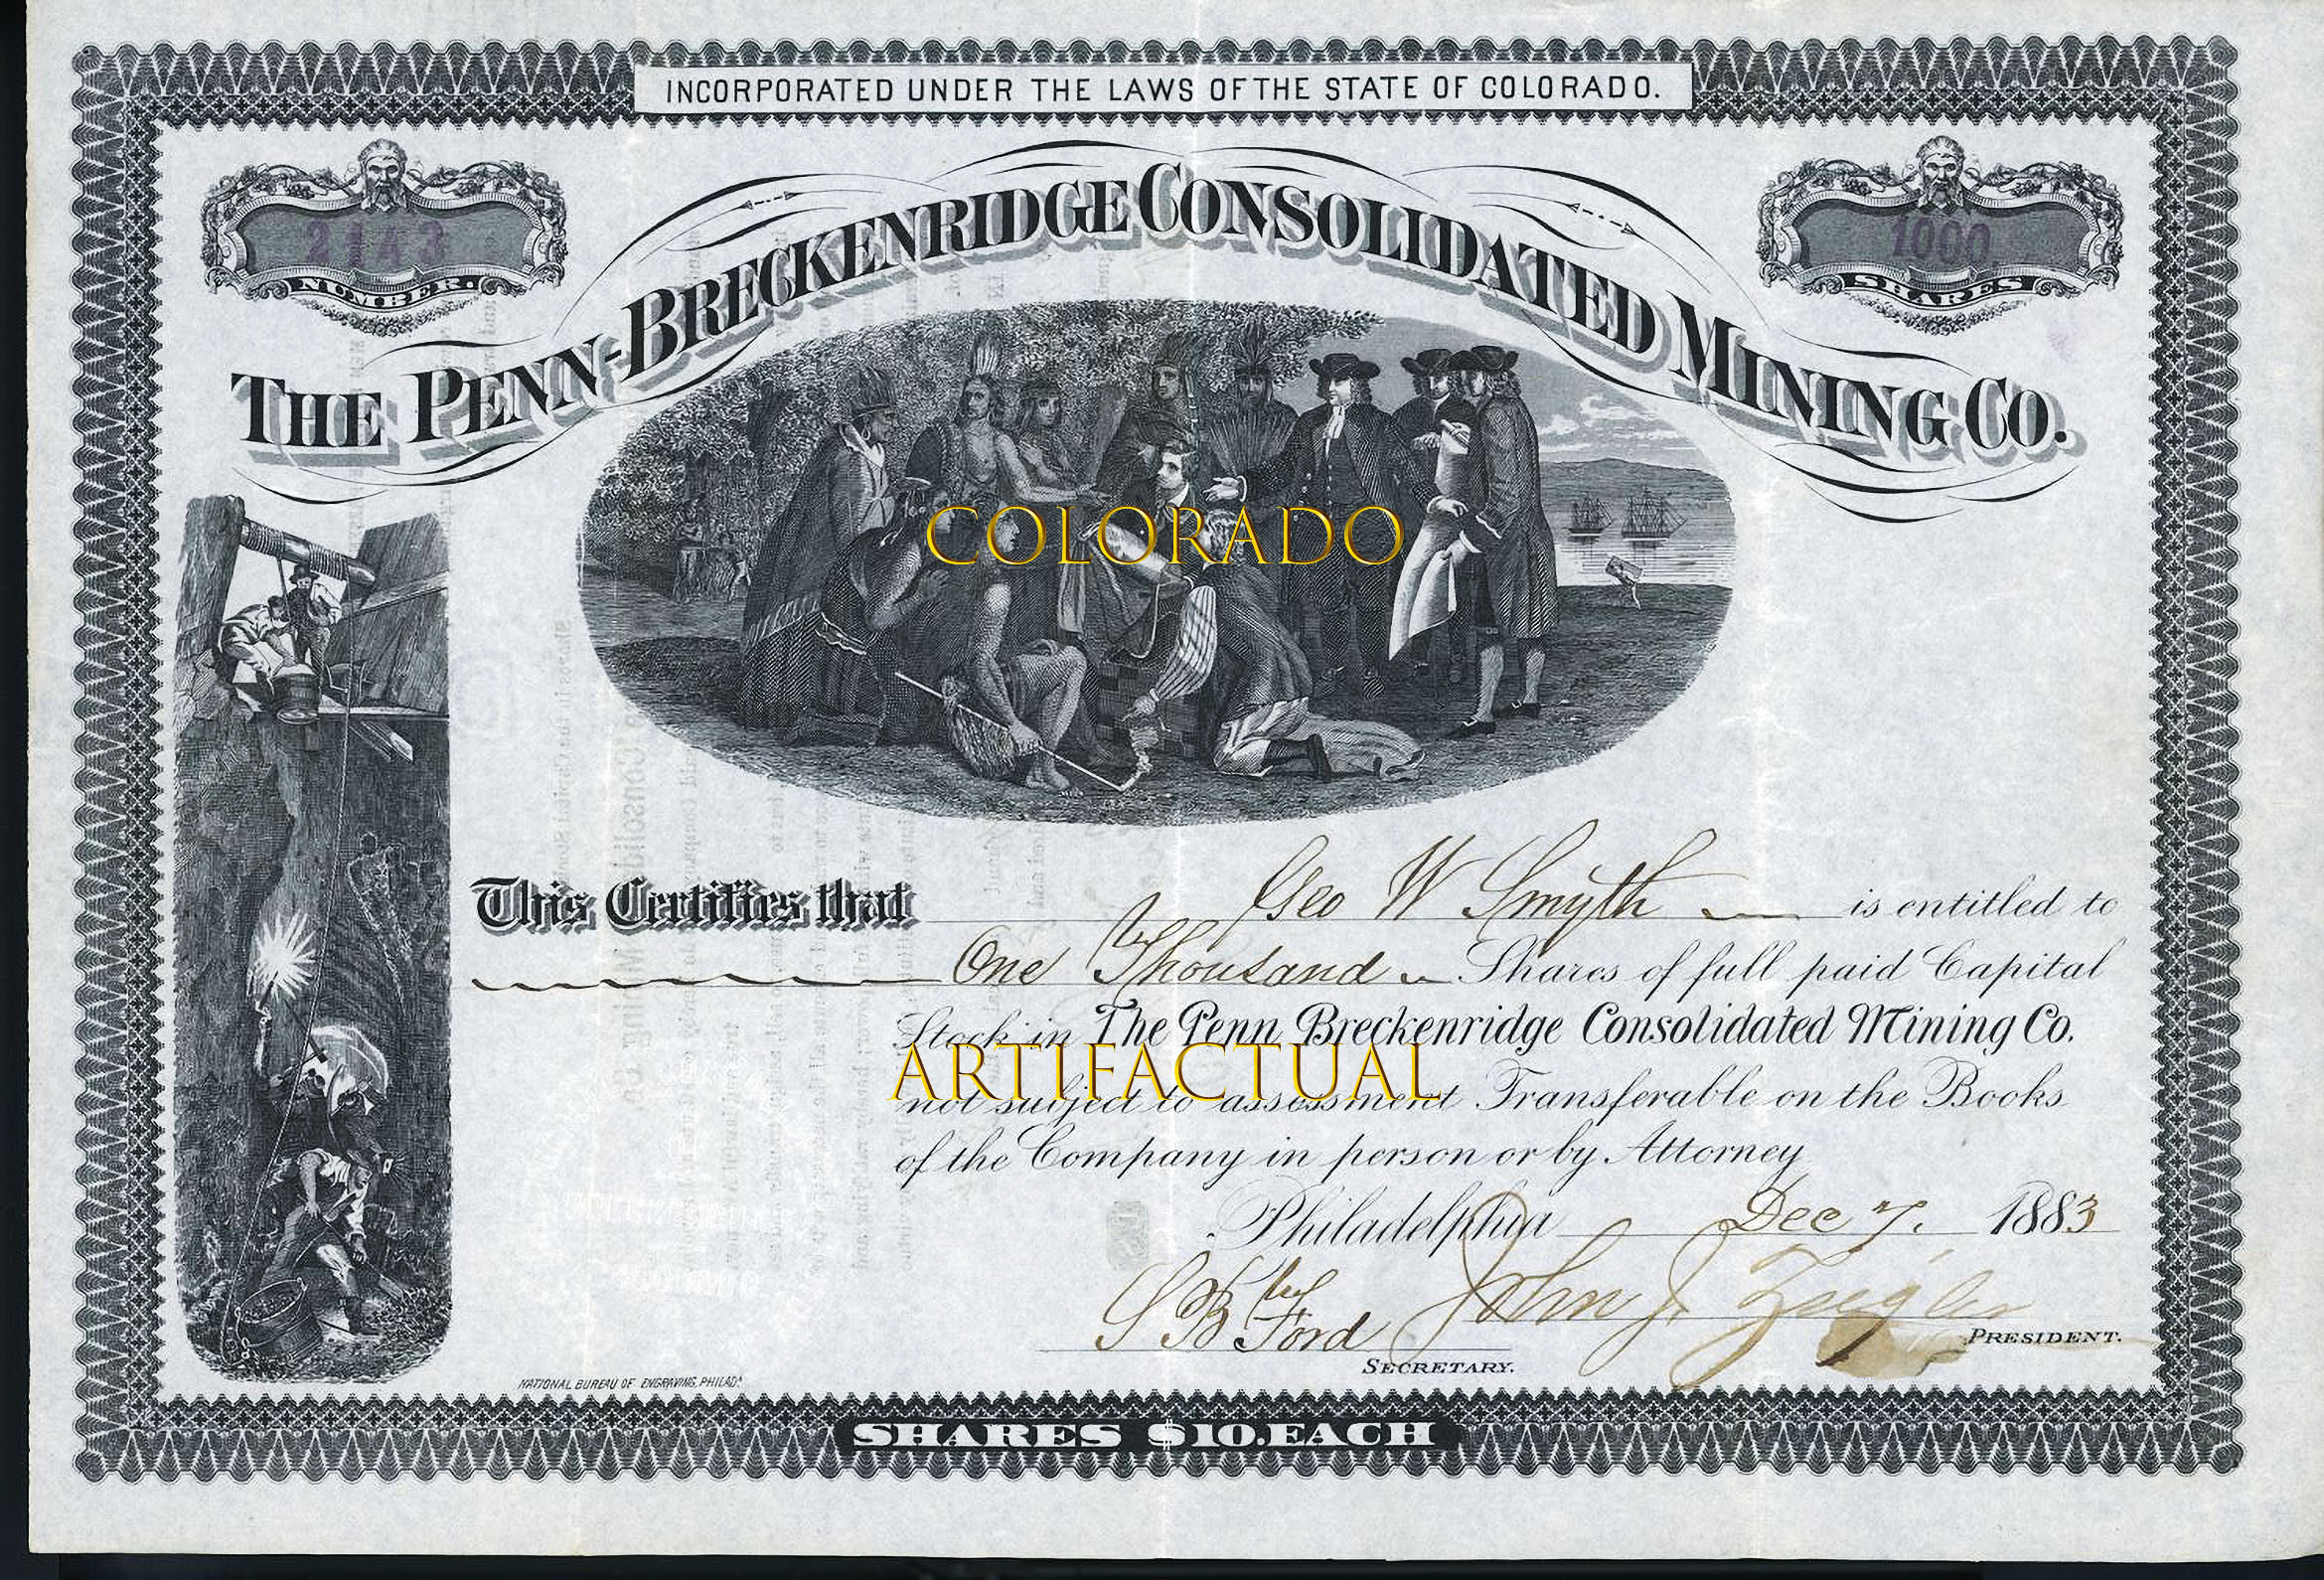 PENN-BRECKENRIDGE CONSOLIDATED MINING COMPANY Summit County Colorado stock certificate 1883